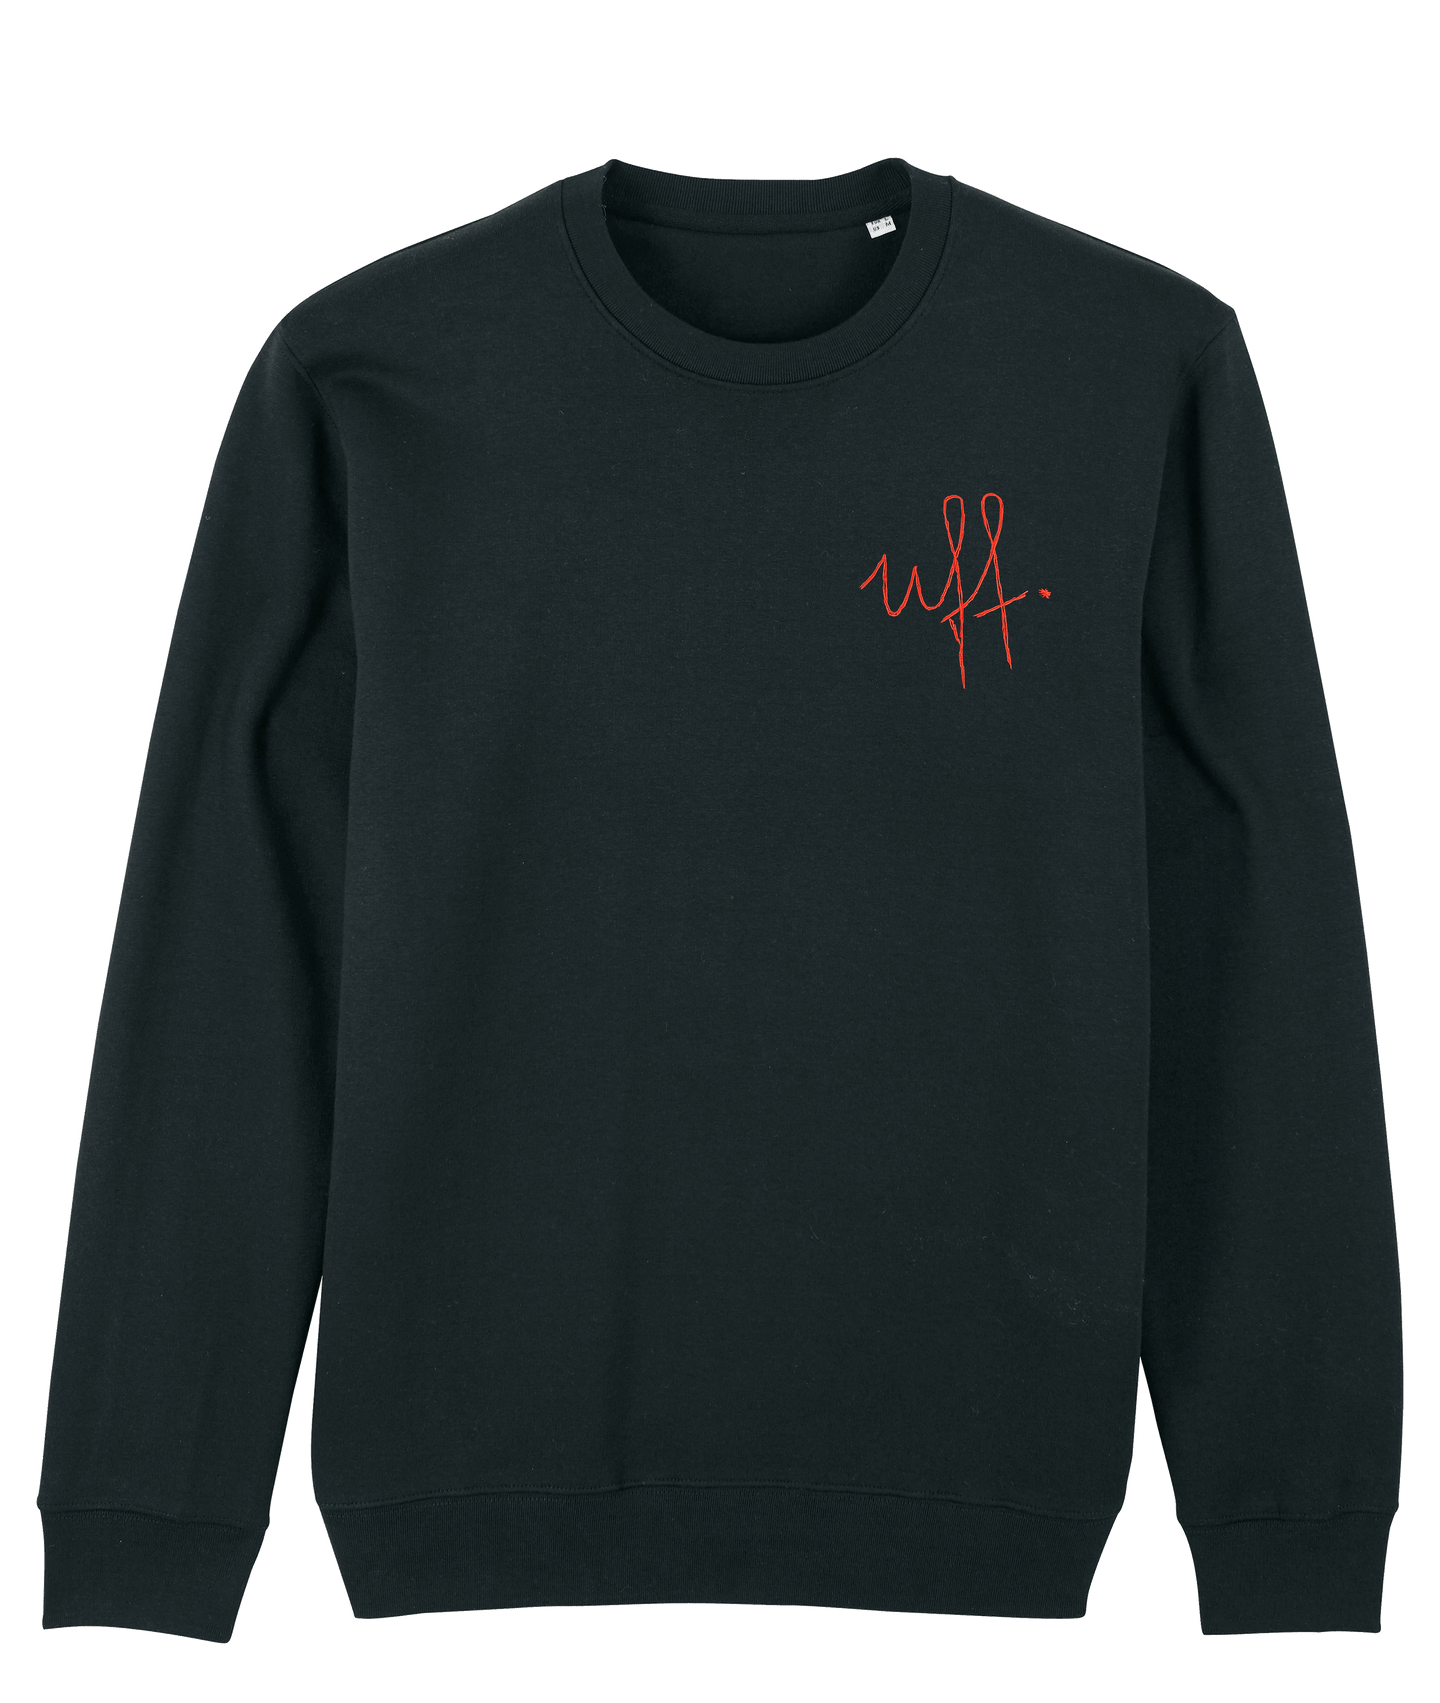 Organic Sweatshirt - The Uff Black